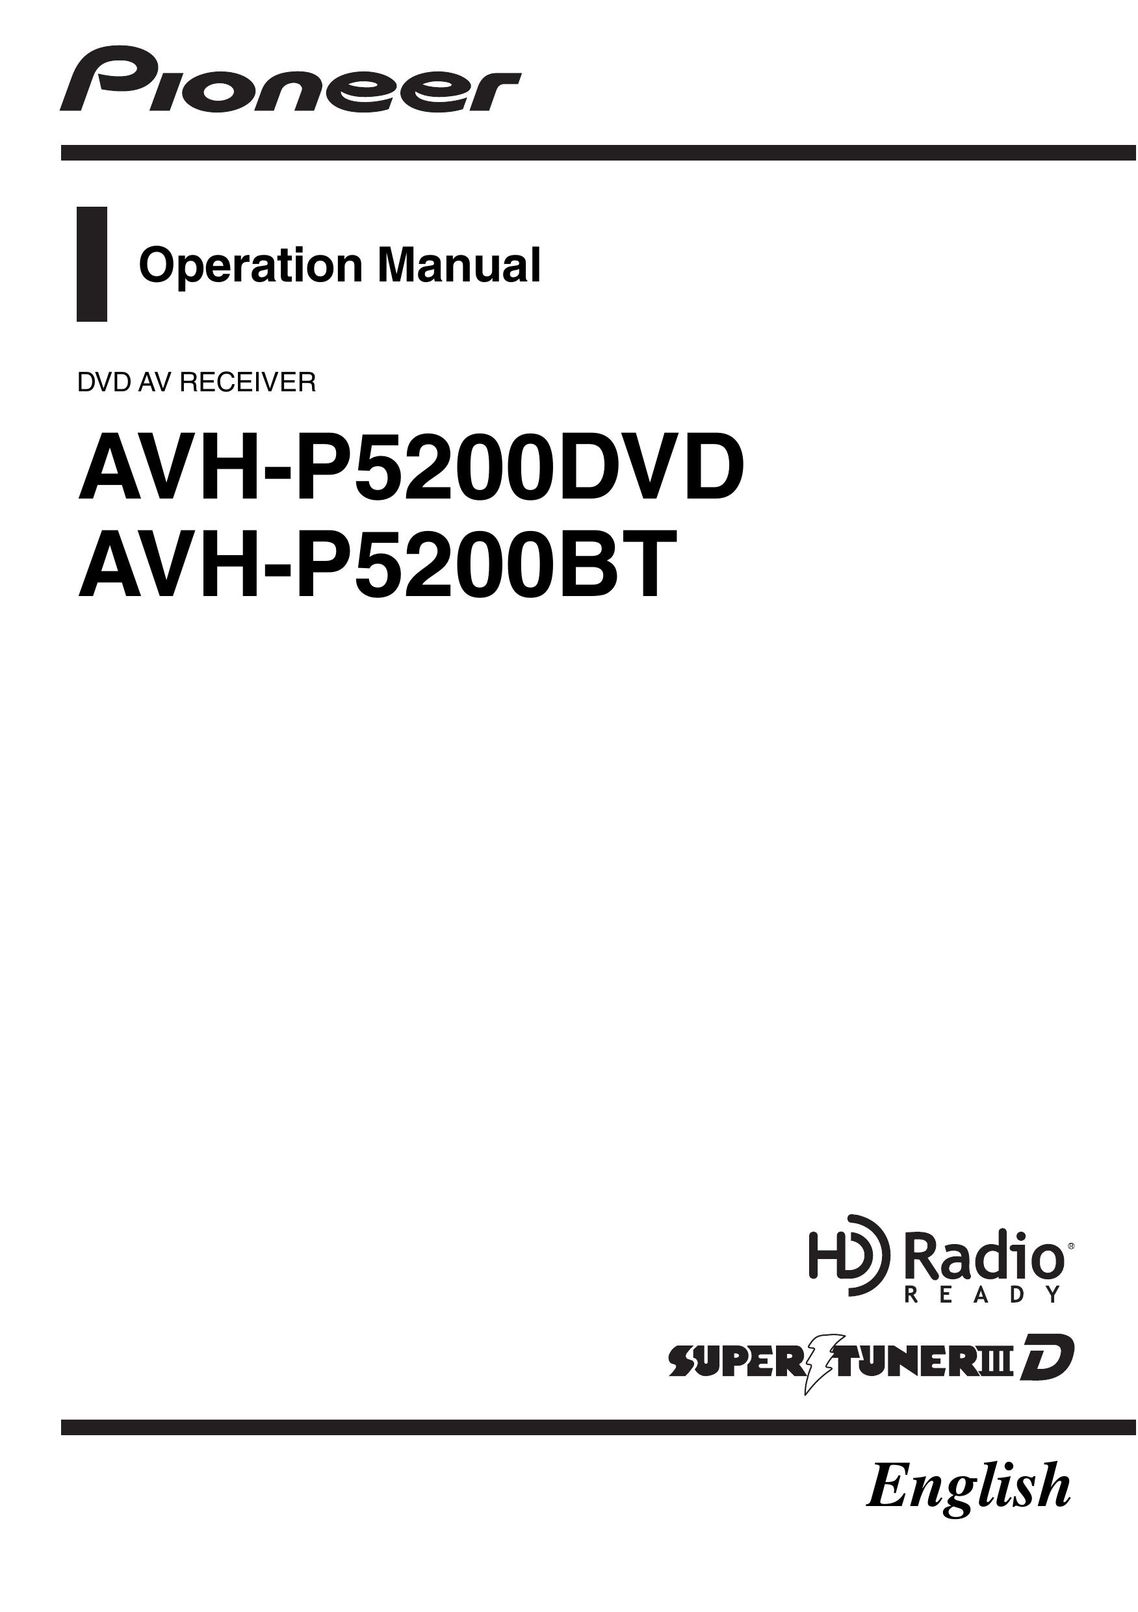 Pioneer AVH-P5200DVD Car Stereo System User Manual